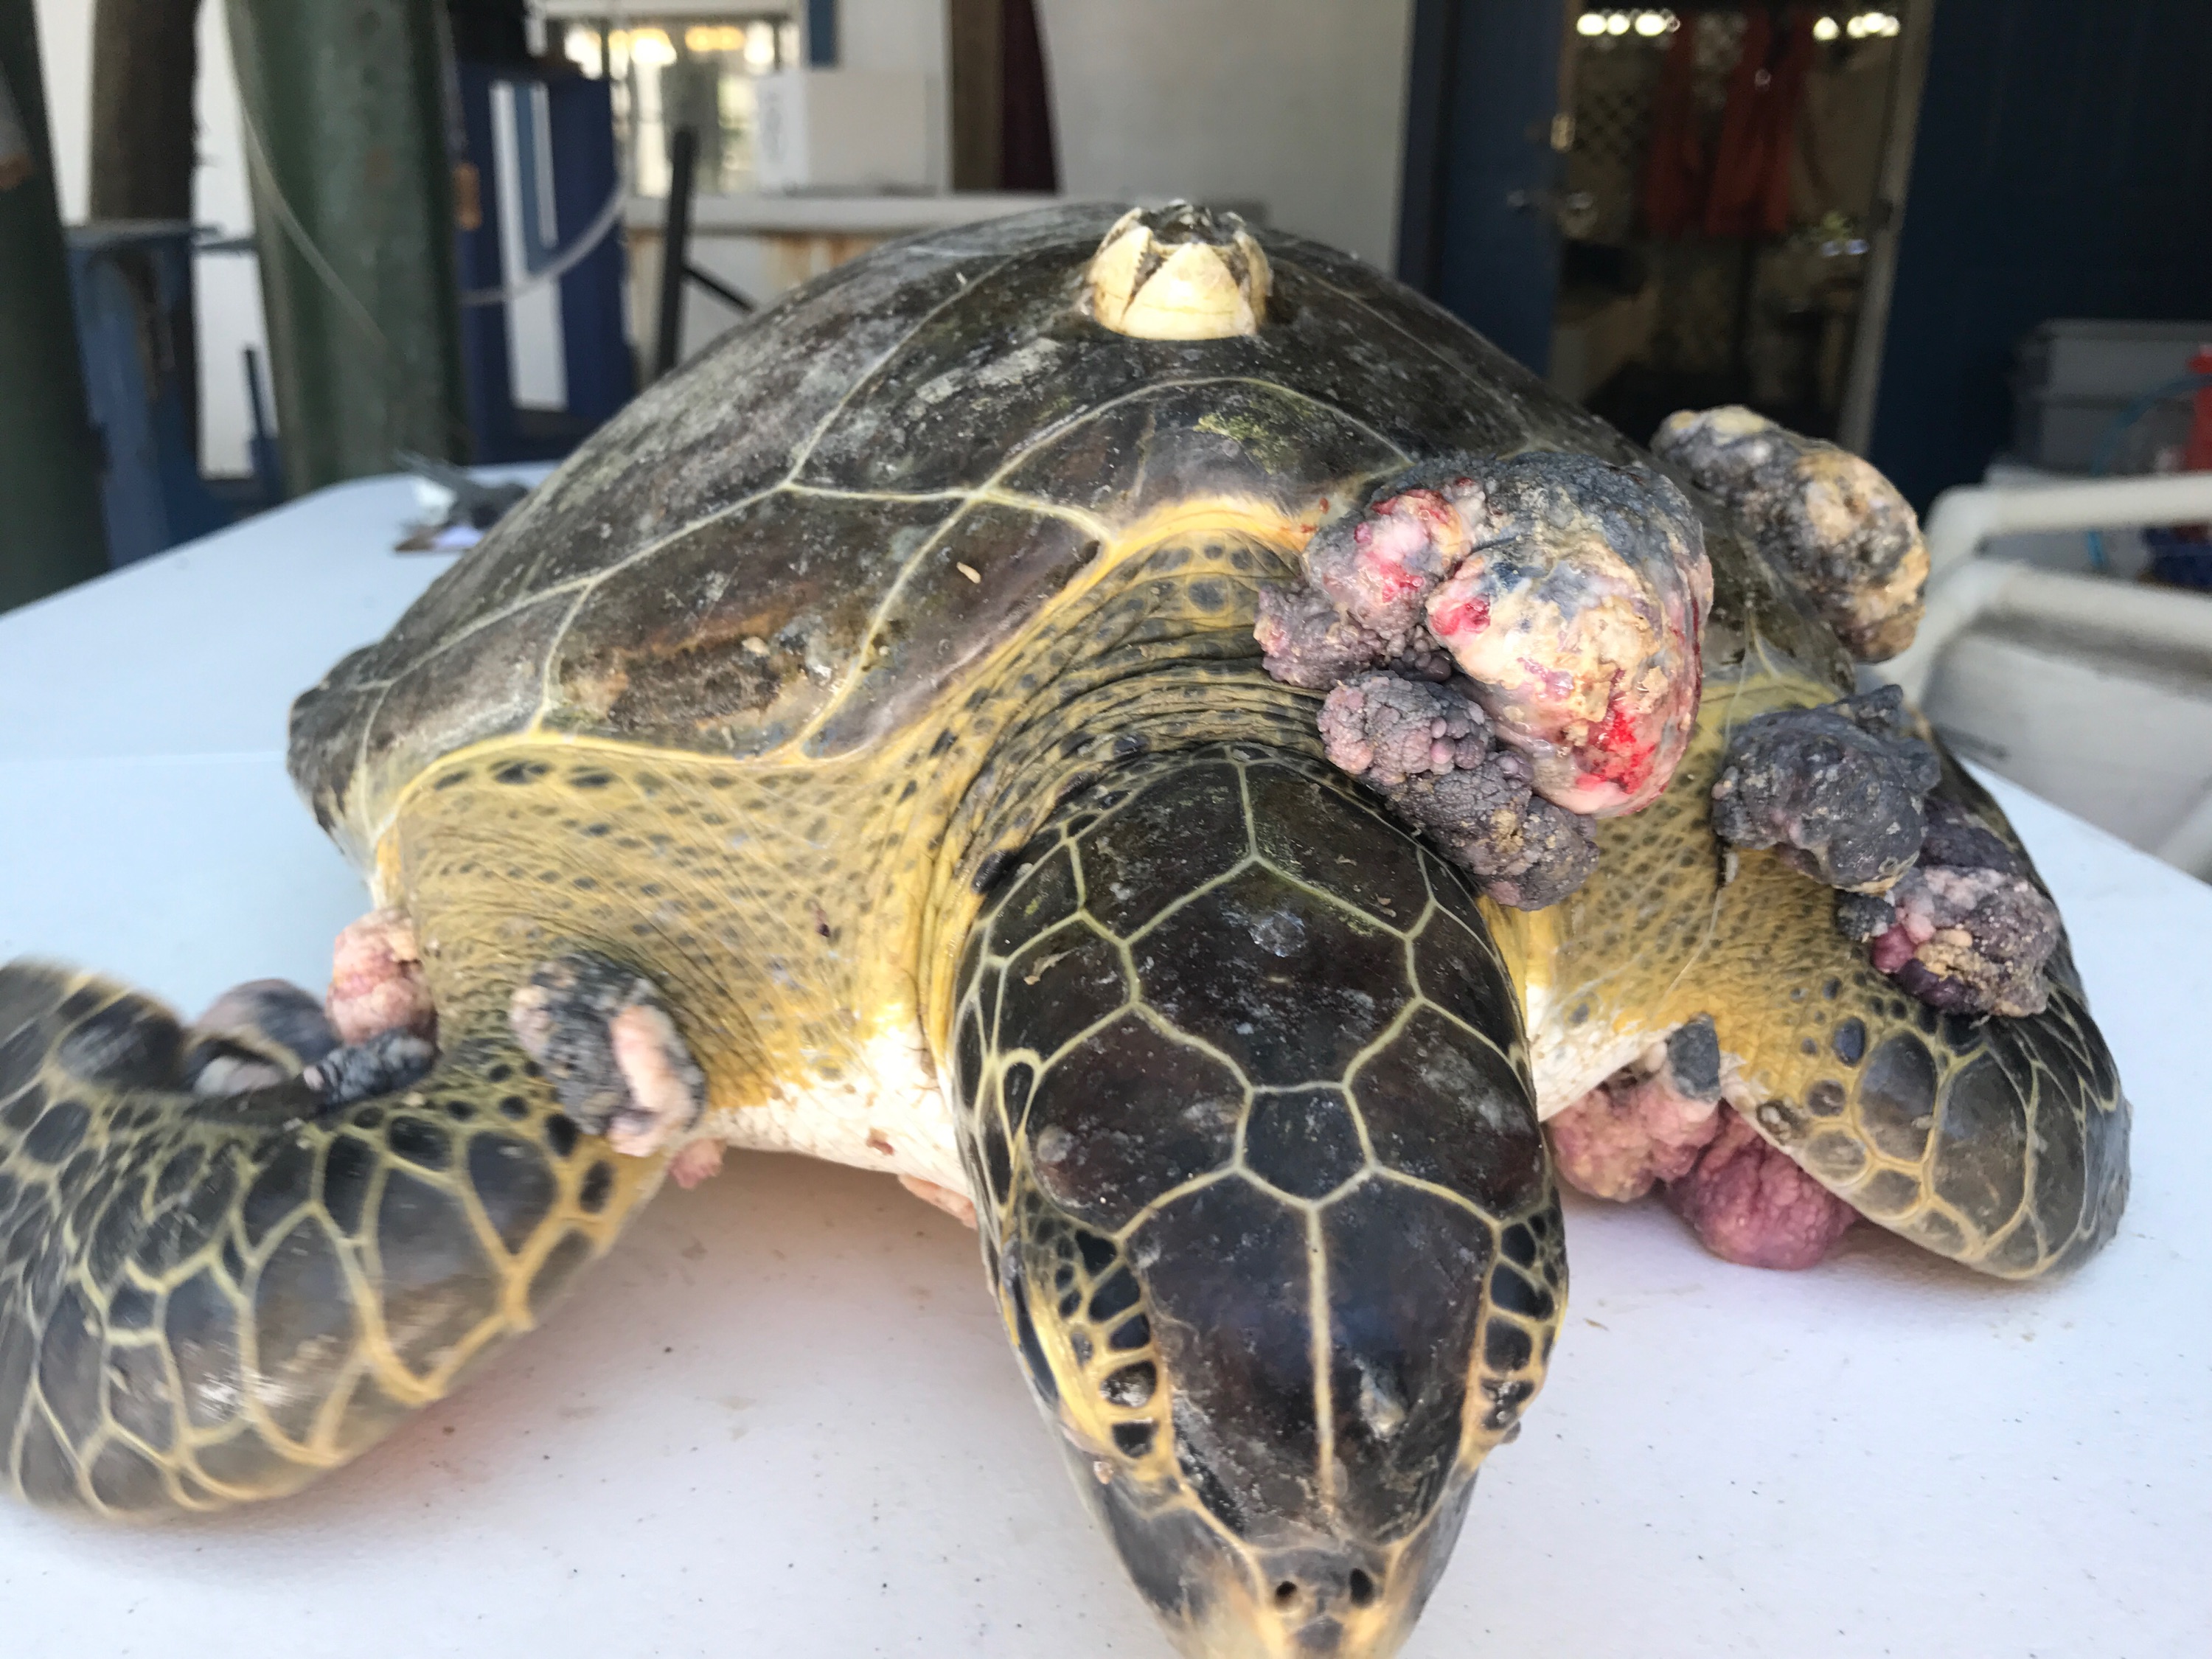 Sea turtle exposed to tumor-causing virus now receiving treatment